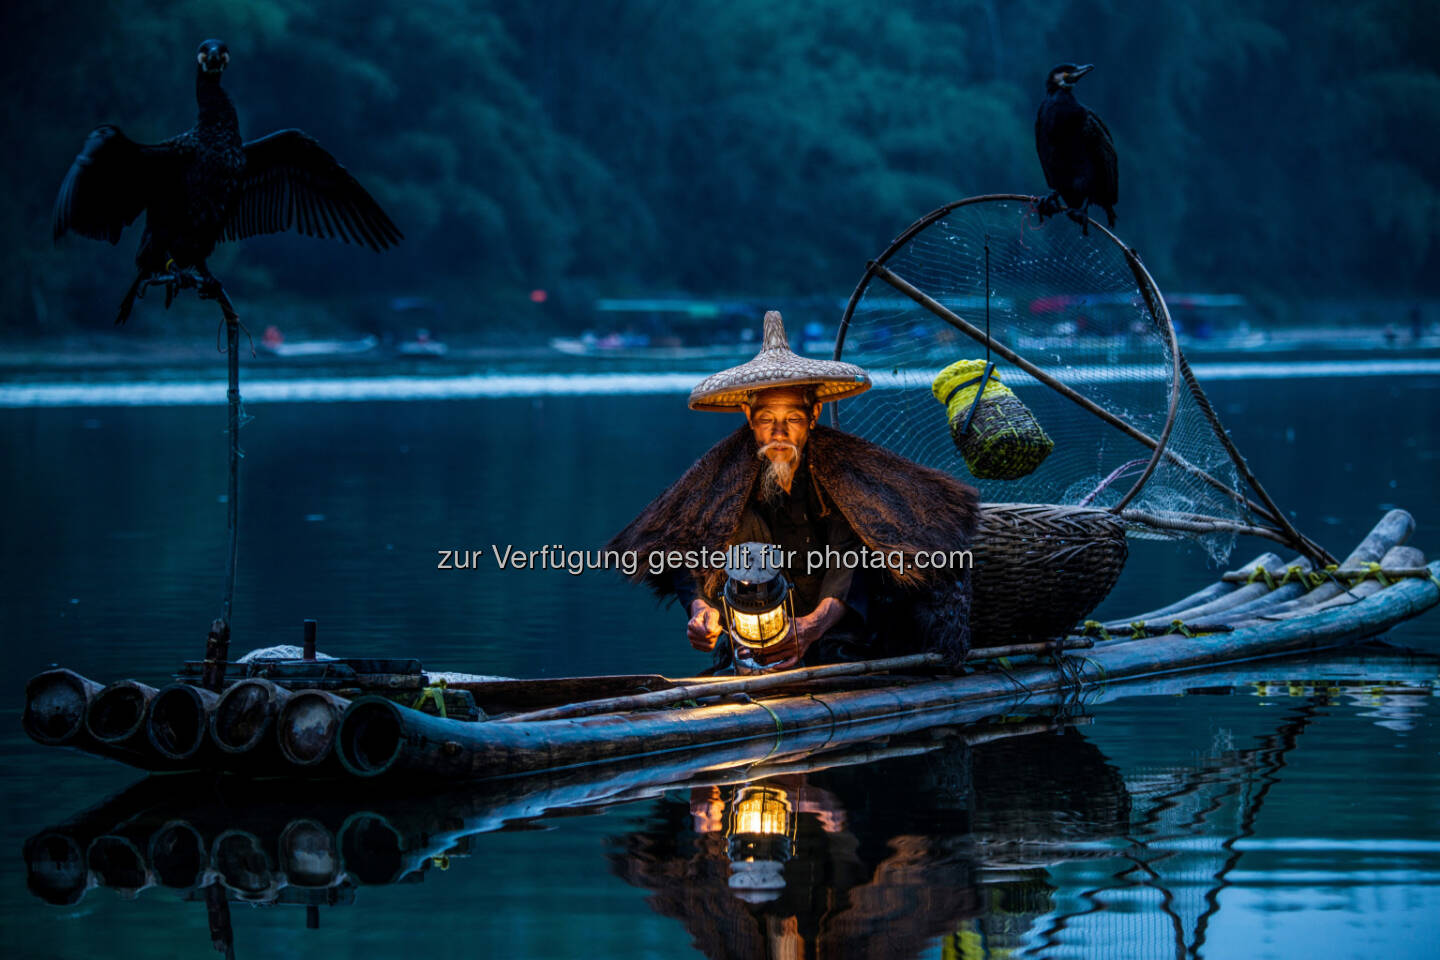 Fishing in Lijiang River (China) : Lange Nacht in der Hartlauer Fotogalerie am 4. November 2016 : Fotocredit: Xi Guan